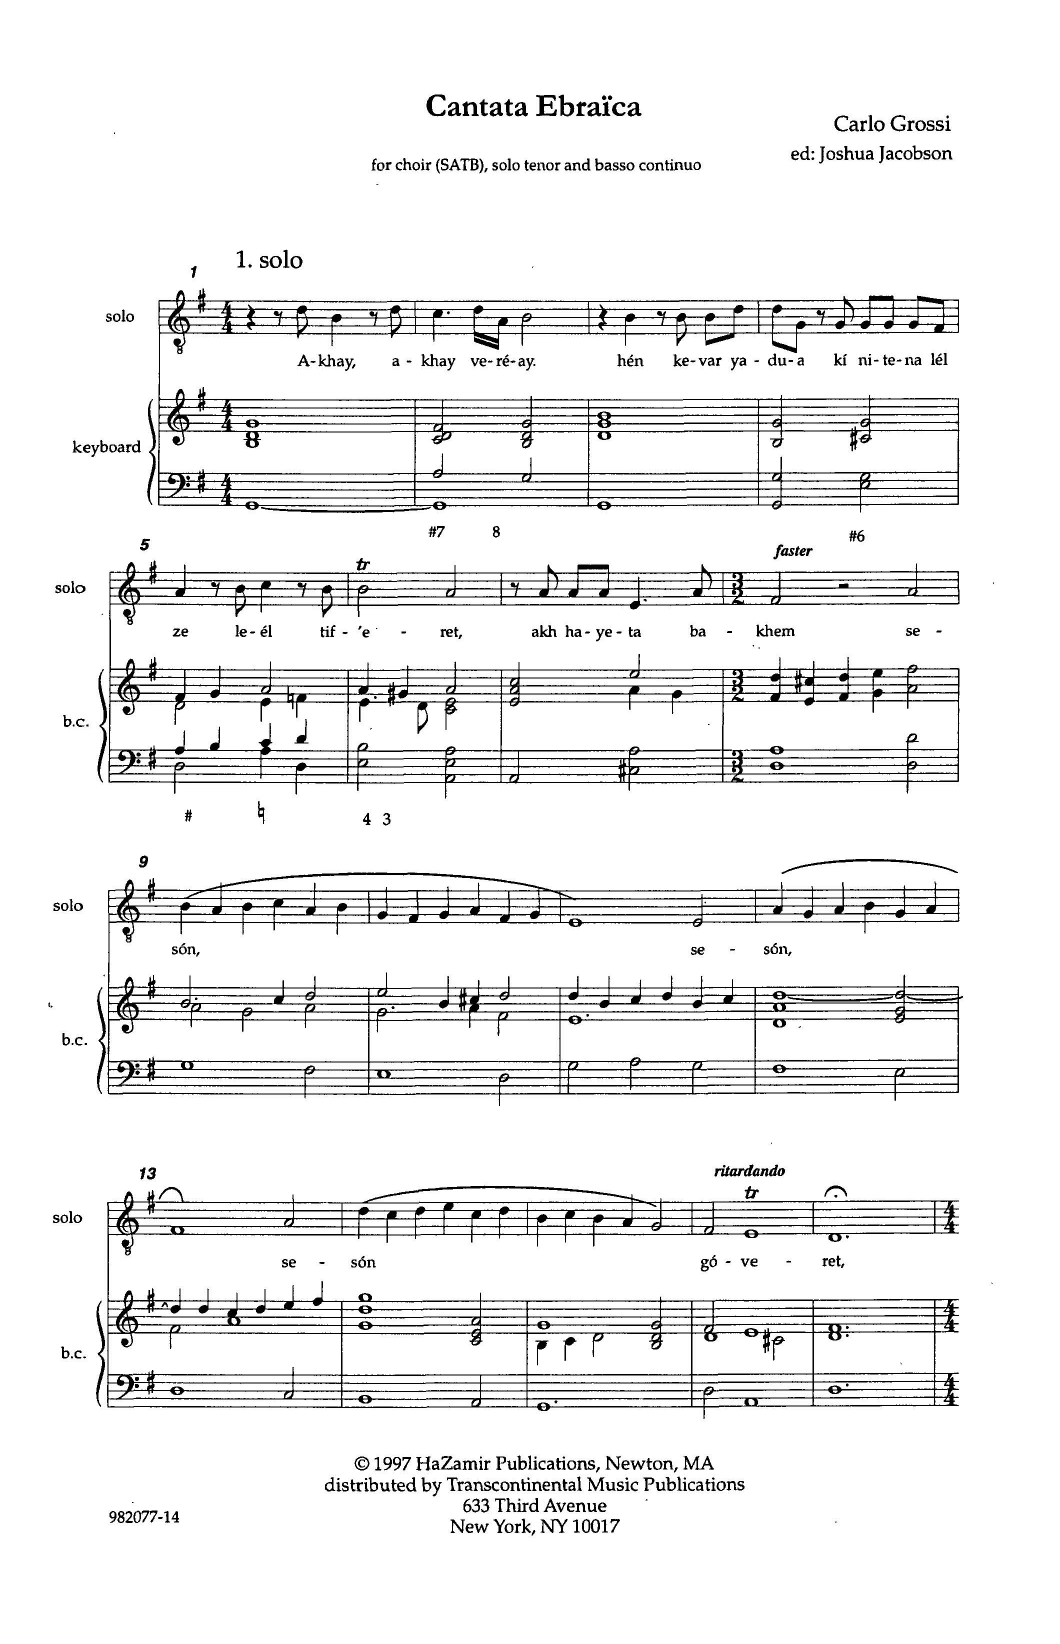 Download Joshua Jacobson Cantata Ebraica Sheet Music and learn how to play SATB Choir PDF digital score in minutes